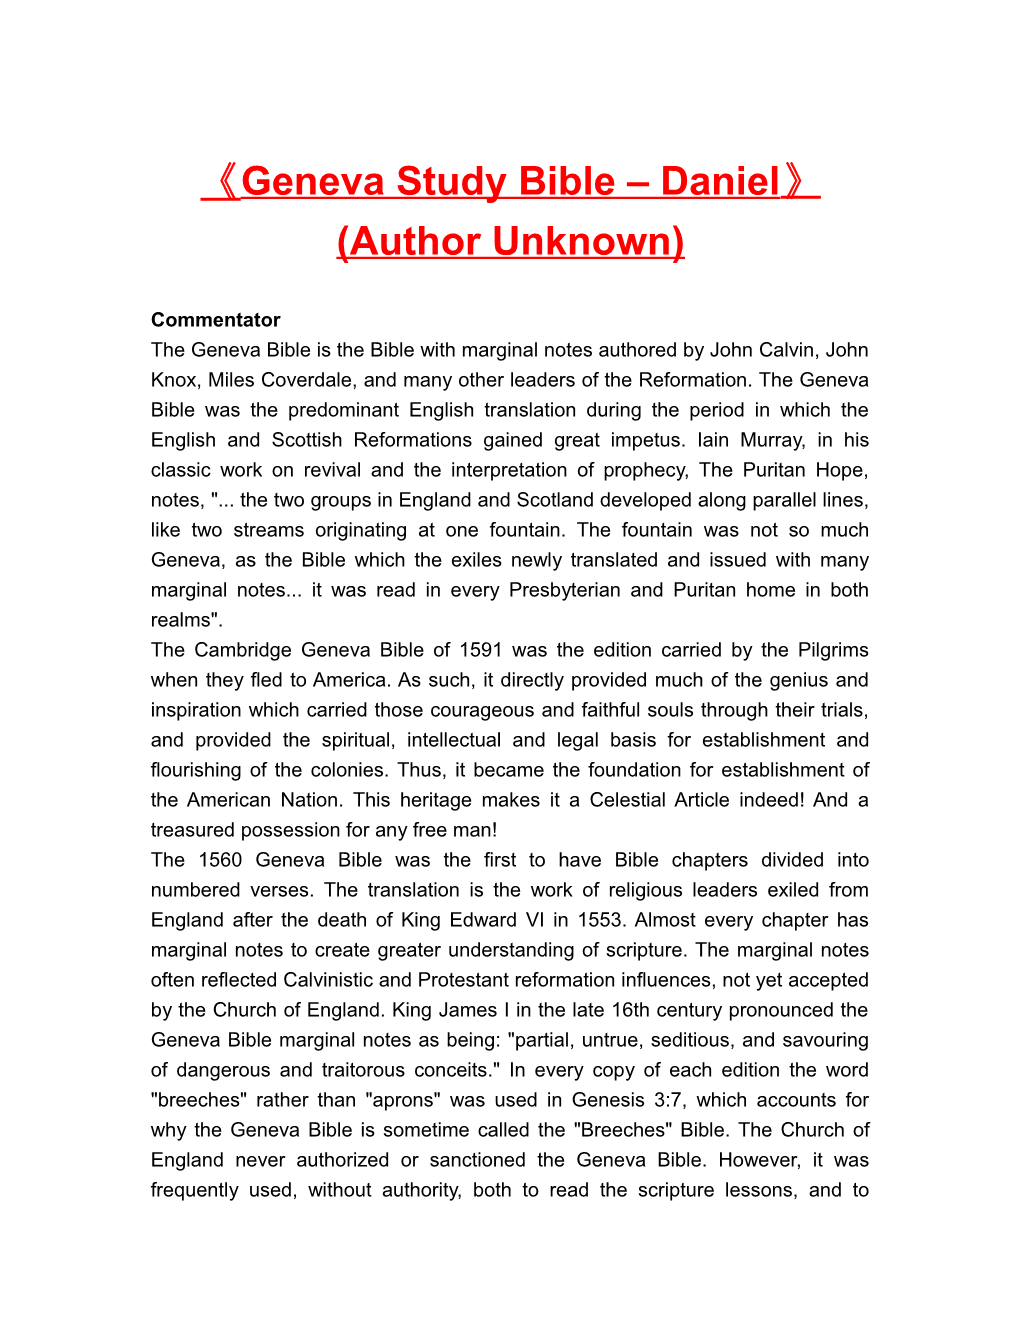 Geneva Study Bible Daniel (Author Unknown)